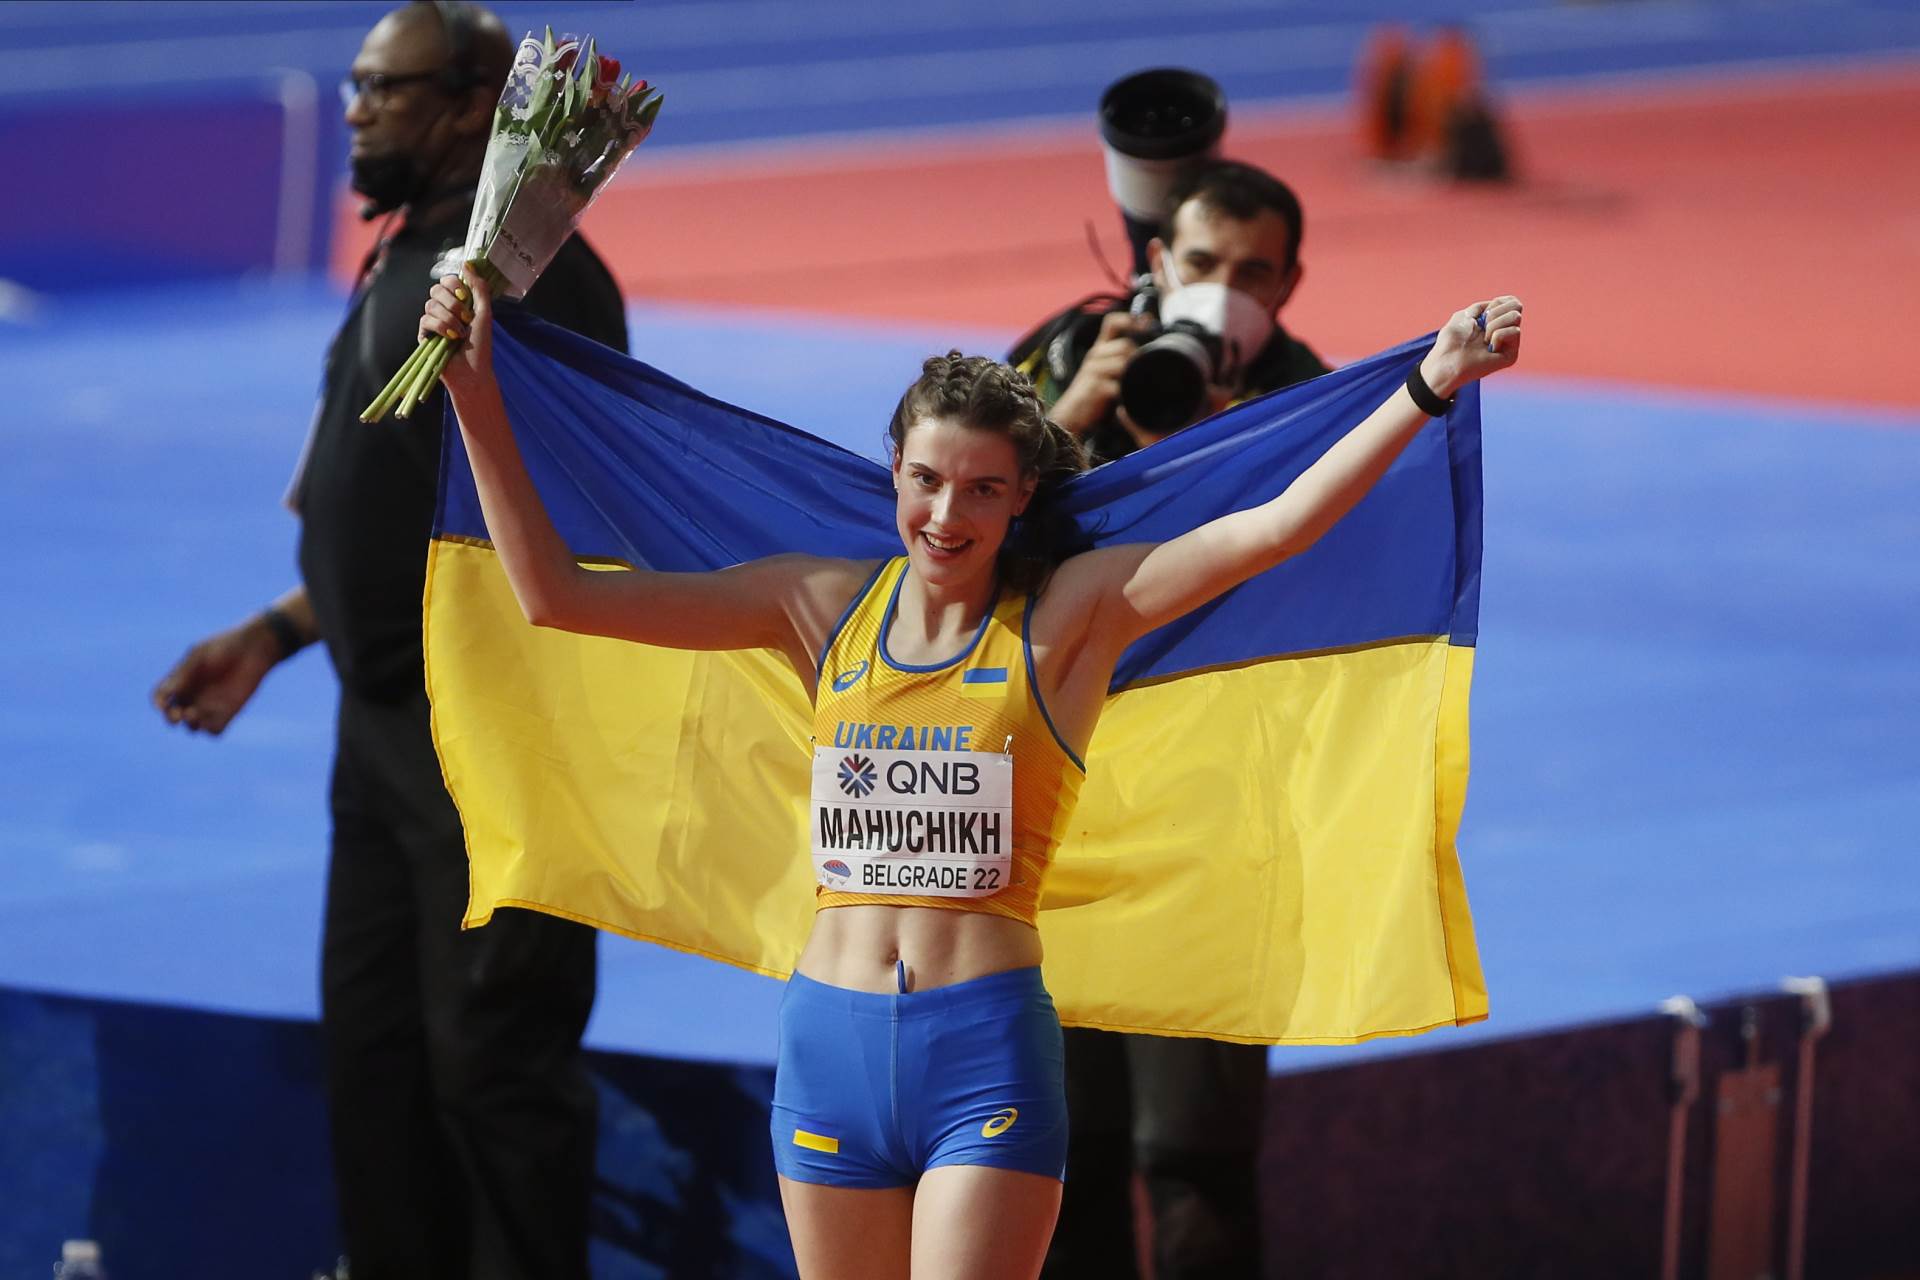  Atletika Ukrajinka (5).JPG 